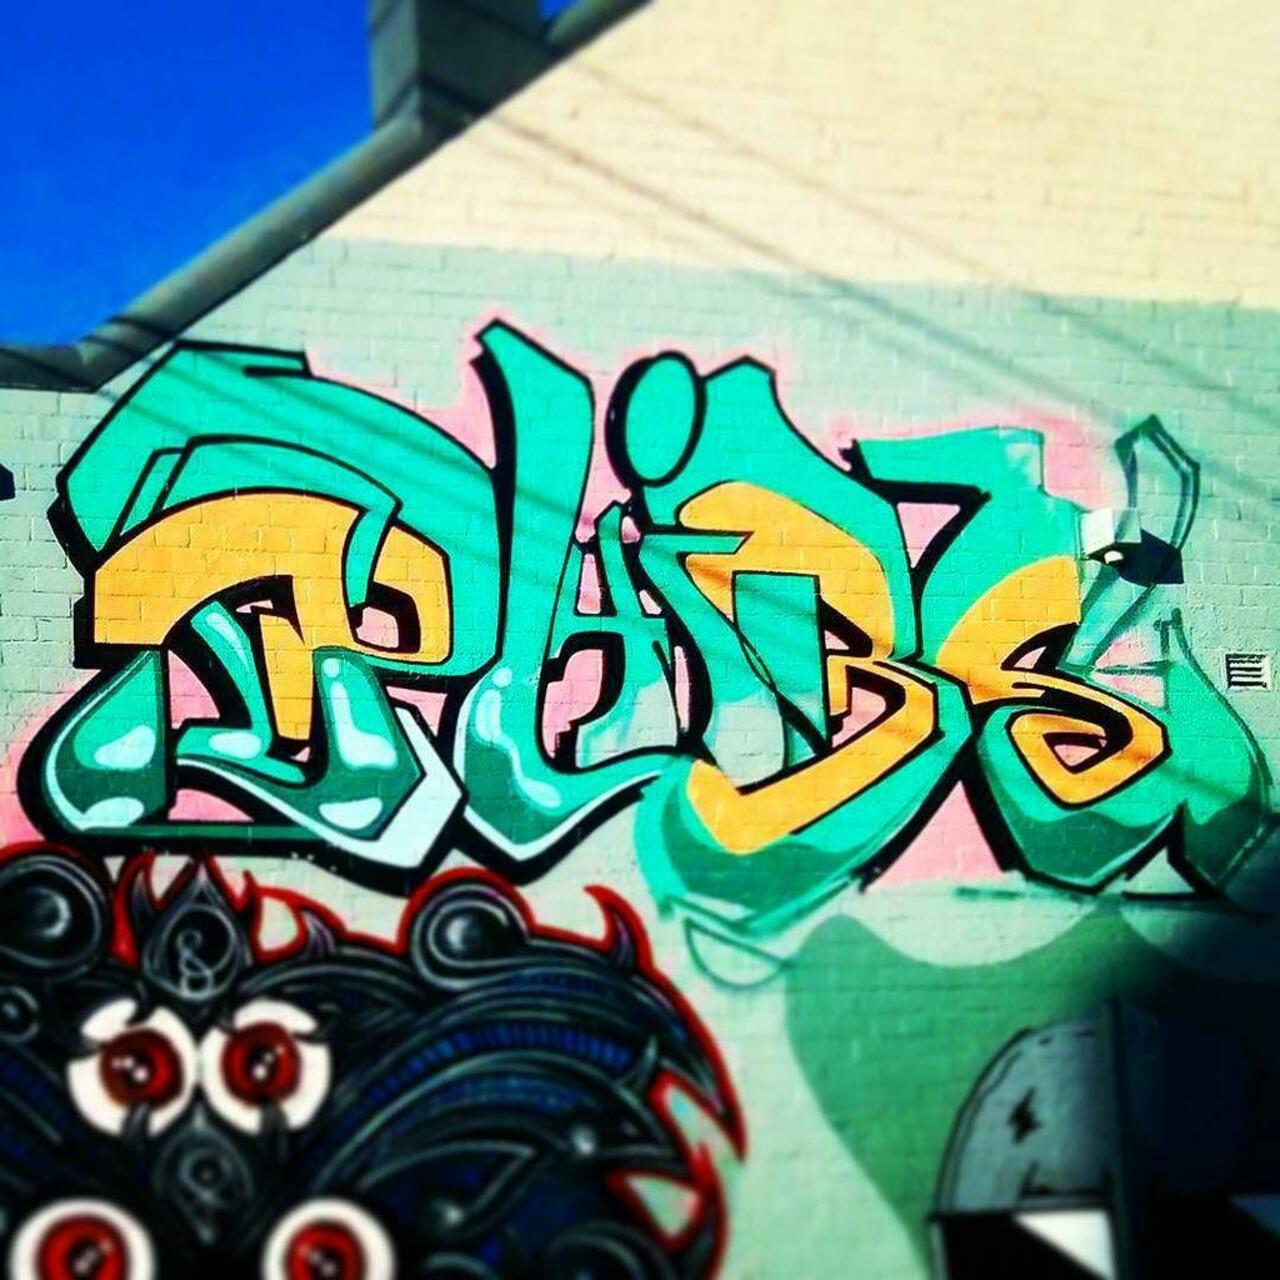 Phibs #ifttt #sydney #sydneygraffiti #phibs #newtown #rsa_graffiti #arteurbano #streetart #graffiti #graffiso http://t.co/vk9SuEE2Li